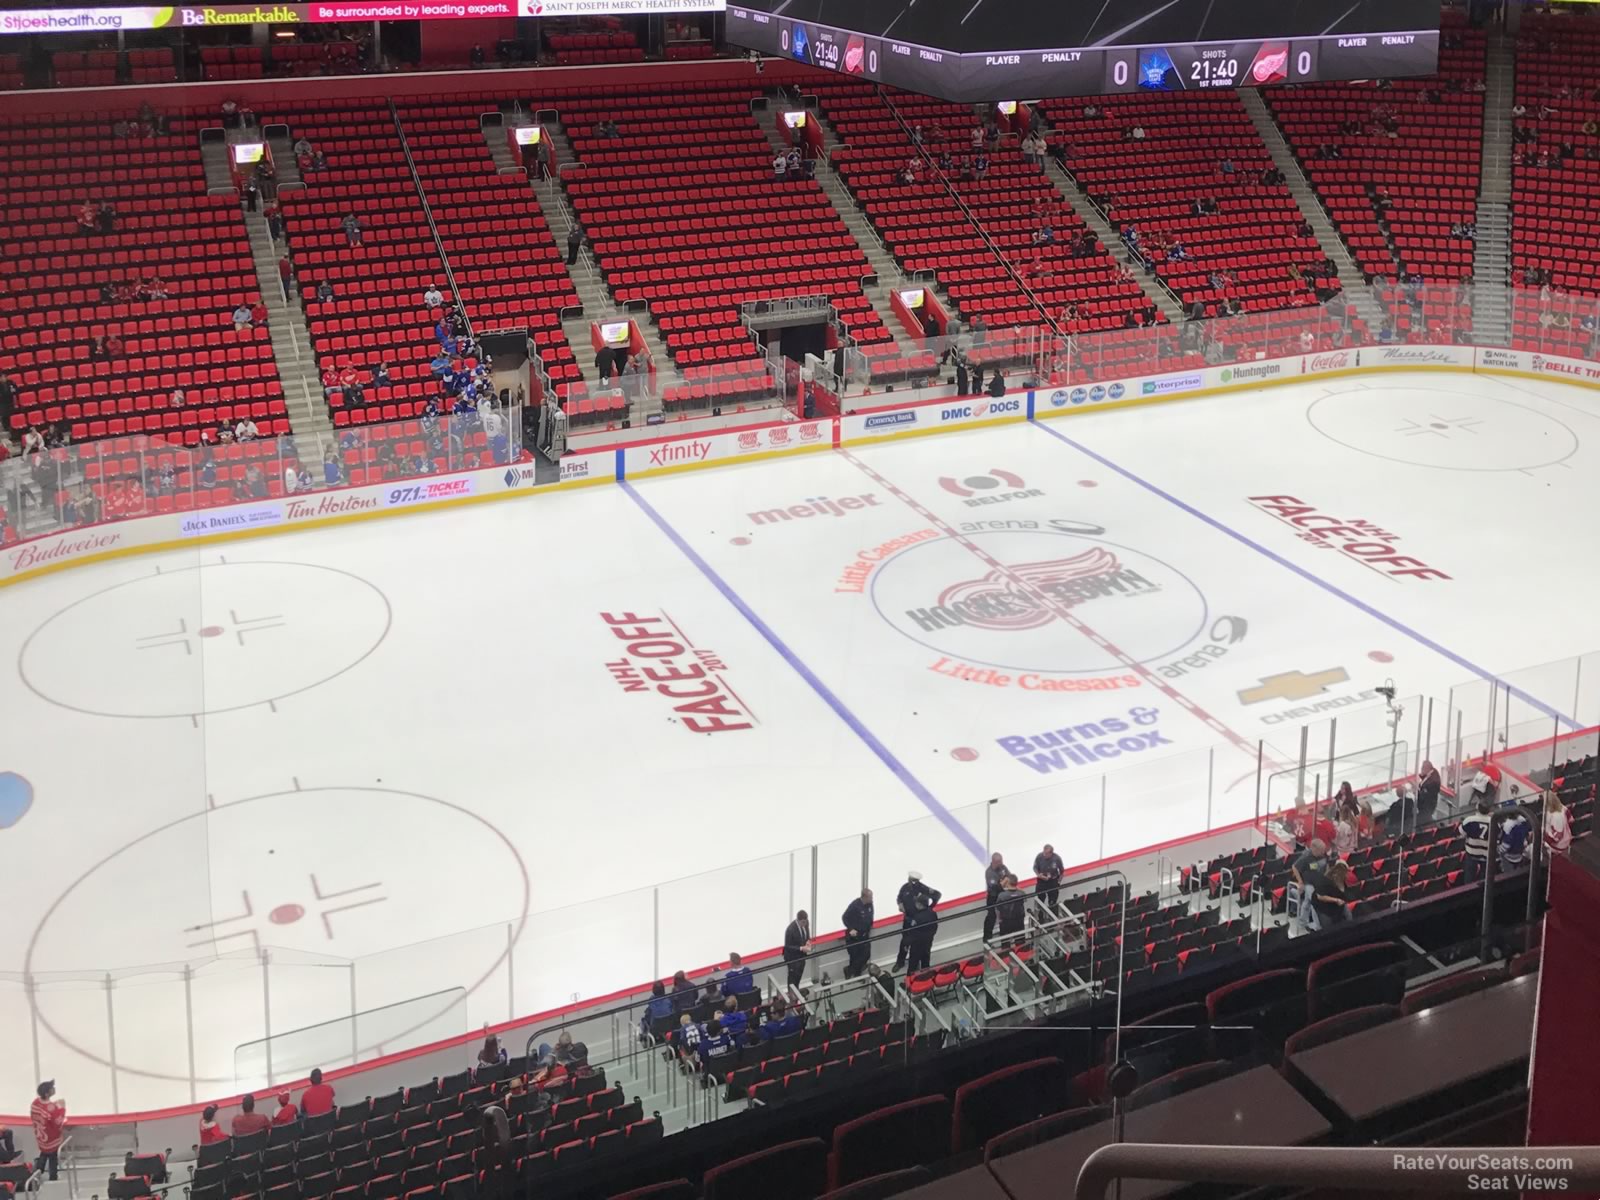 mezzanine 13, row 4 seat view  for hockey - little caesars arena